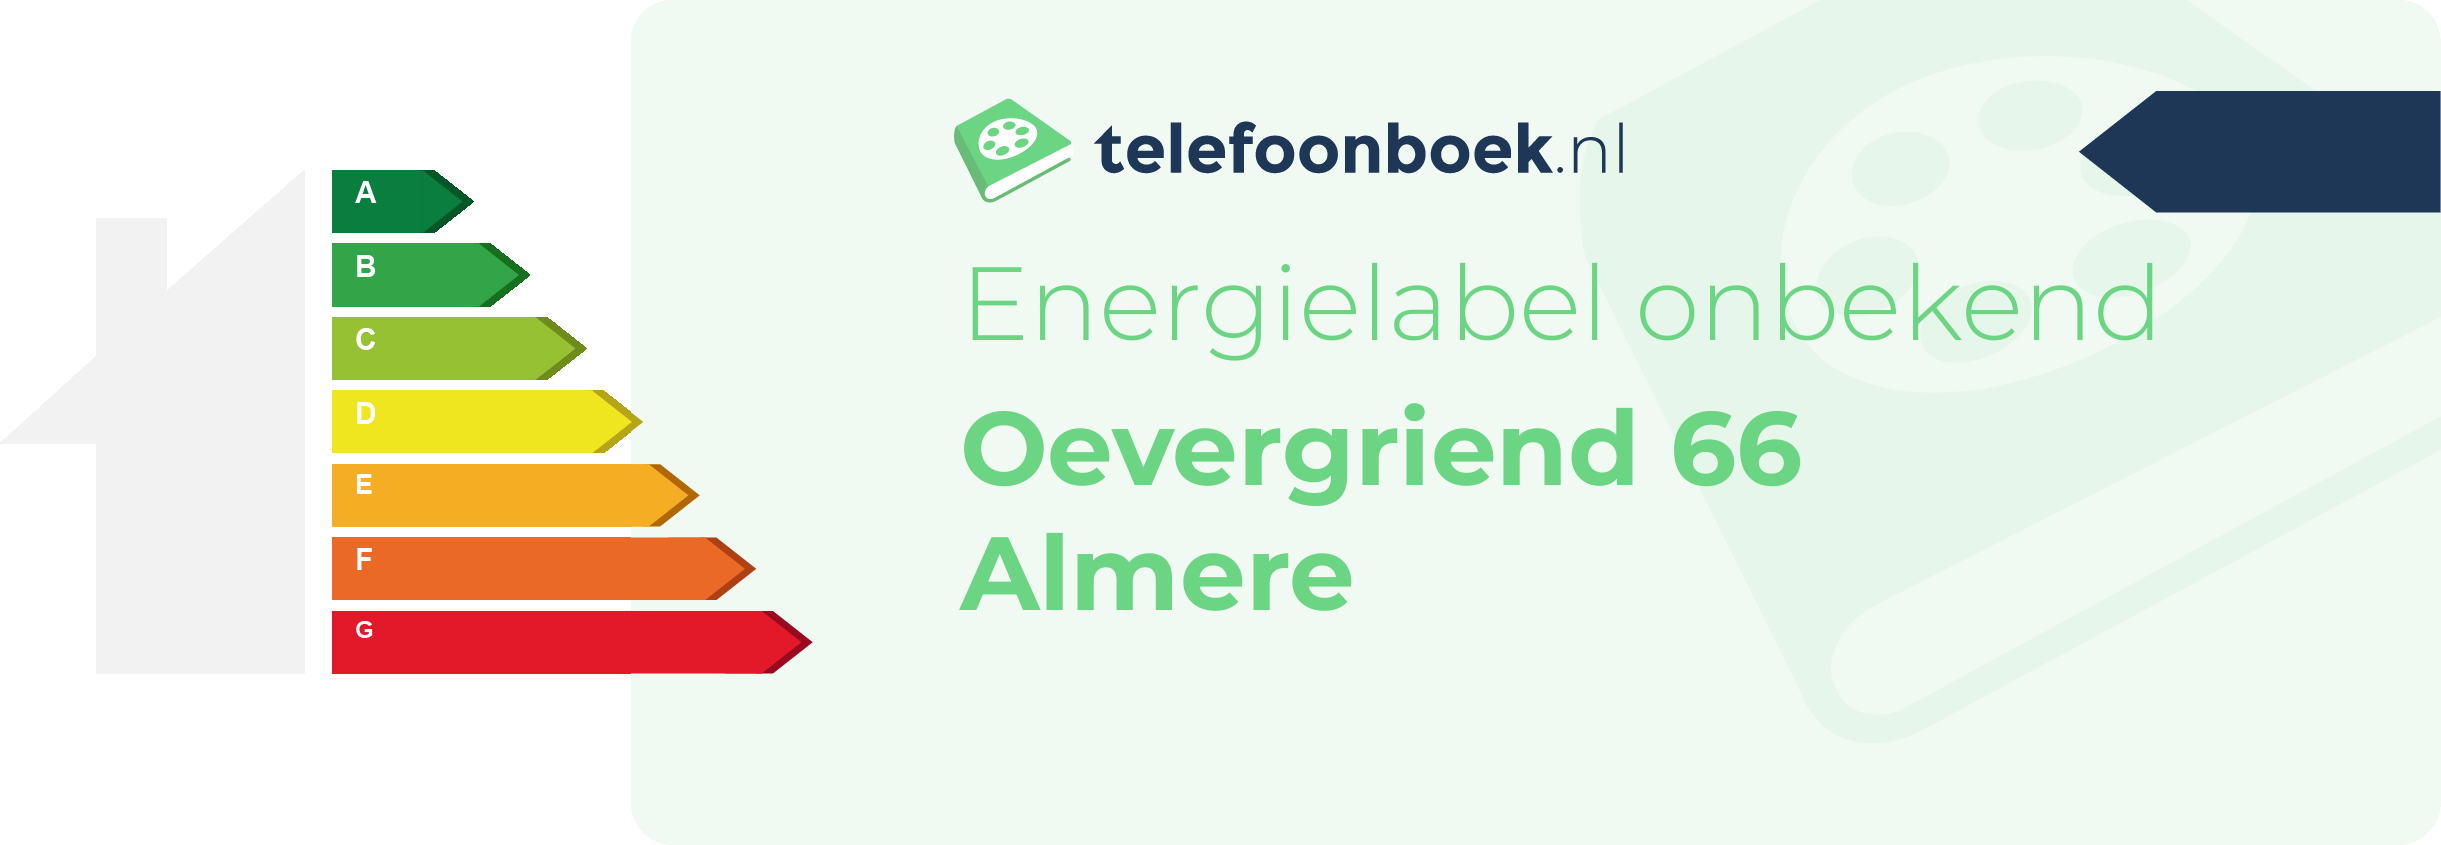 Energielabel Oevergriend 66 Almere